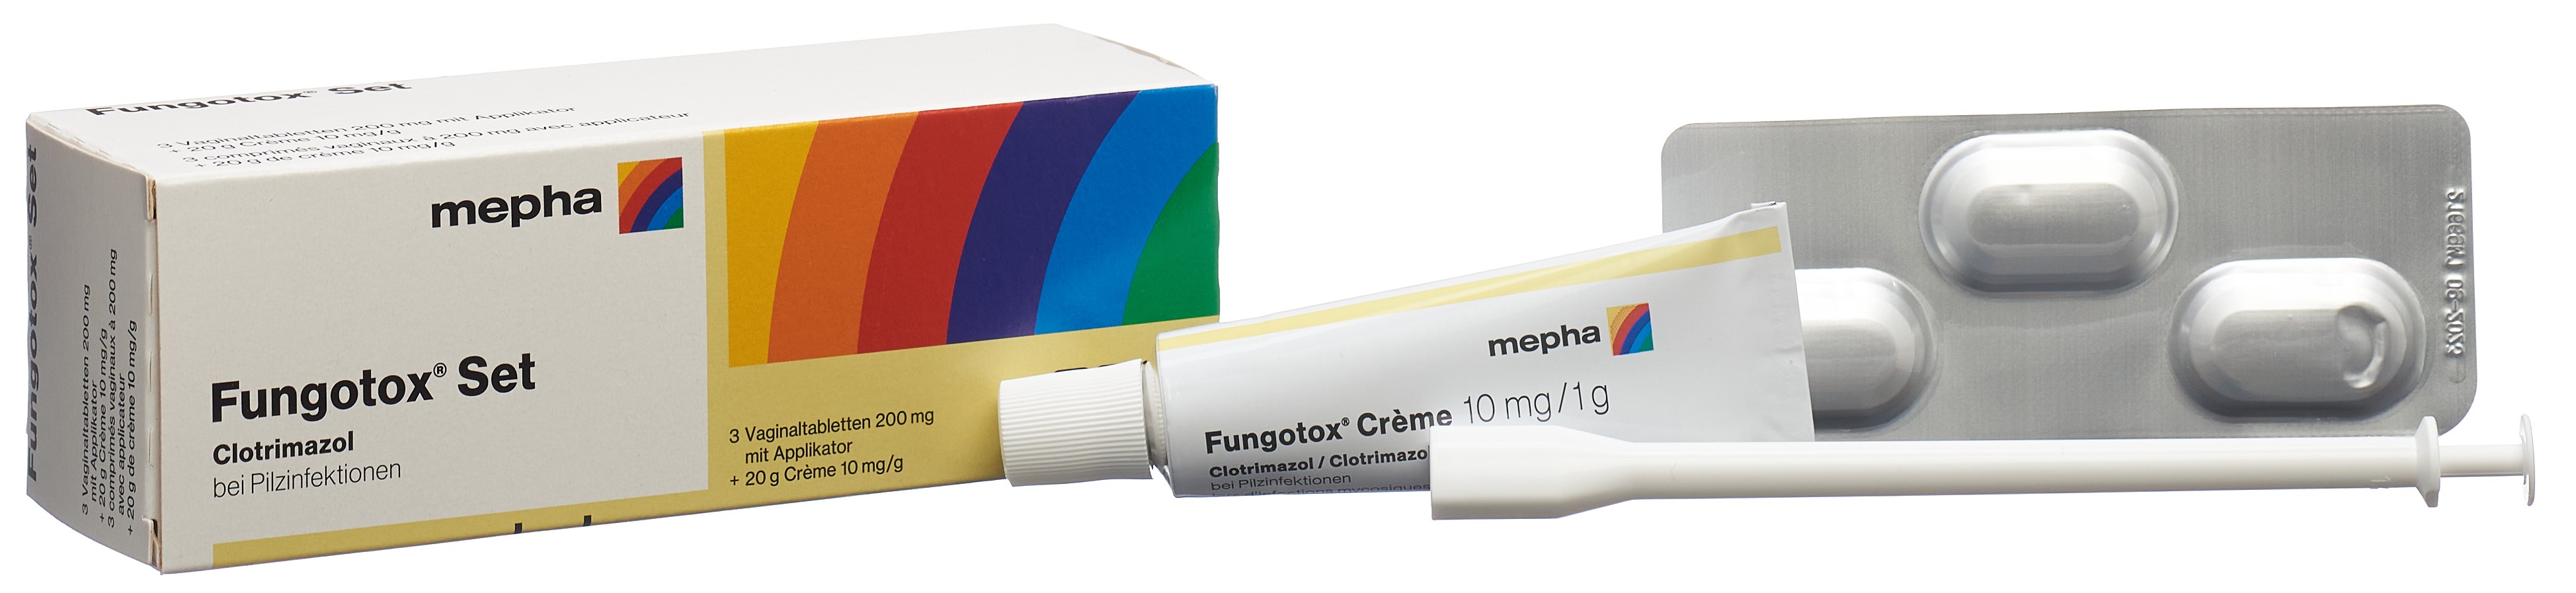 FUNGOTOX Set 3 Vaginaltabl+20 g Creme